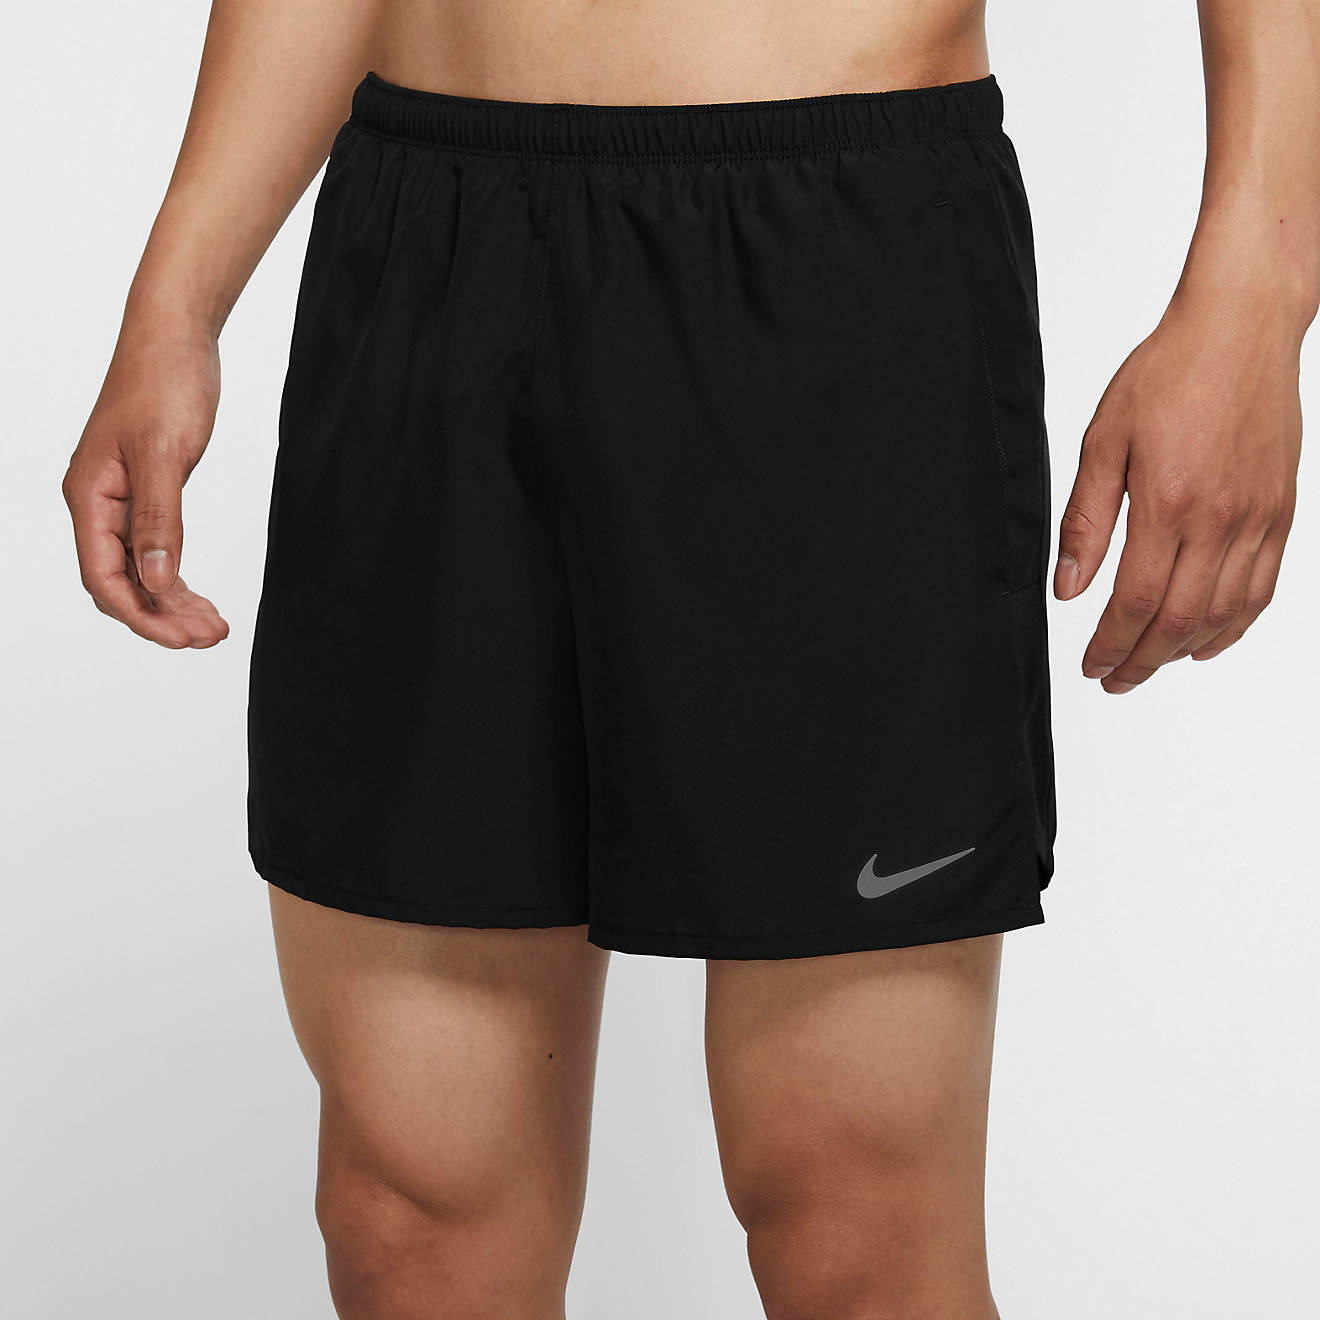 At opdage brug Tænk fremad Nike Men's Dri-FIT Challenger Brief-Lined Running Shorts 5 in | Academy